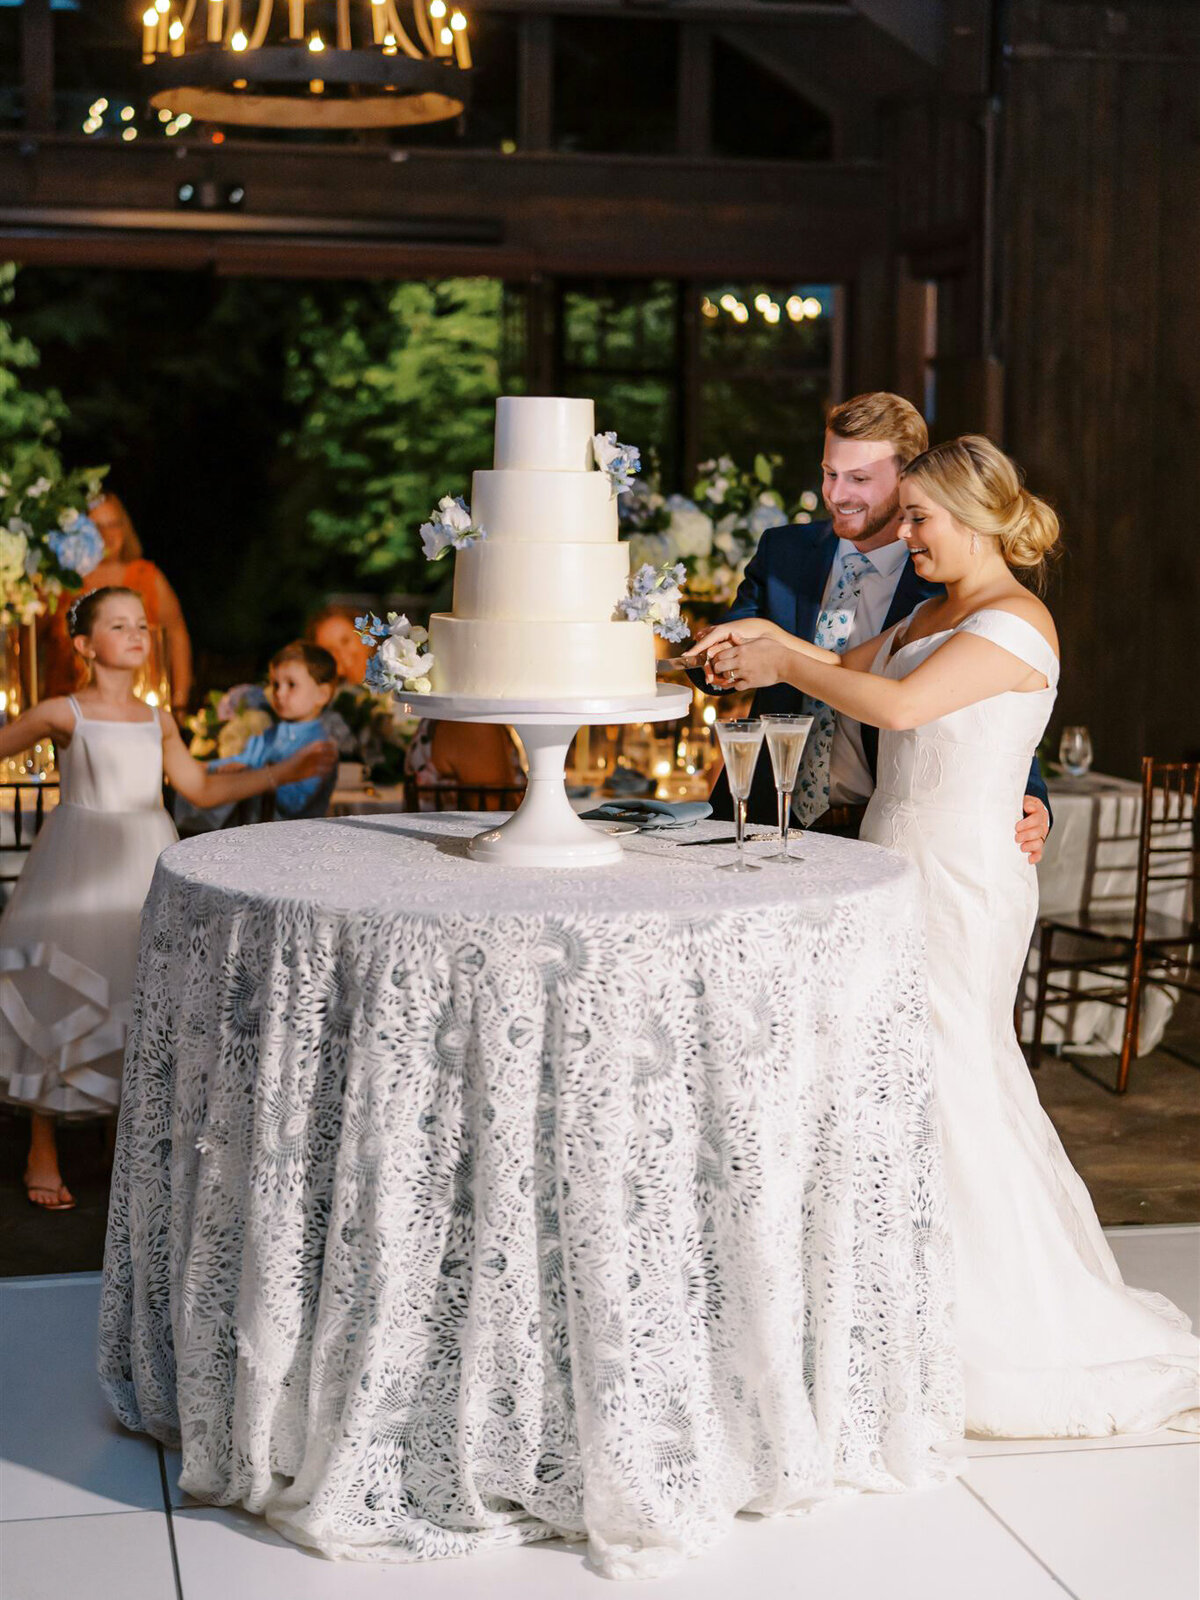 The Farm at Old Edwards Inn – Highlands North Carolina Wedding36